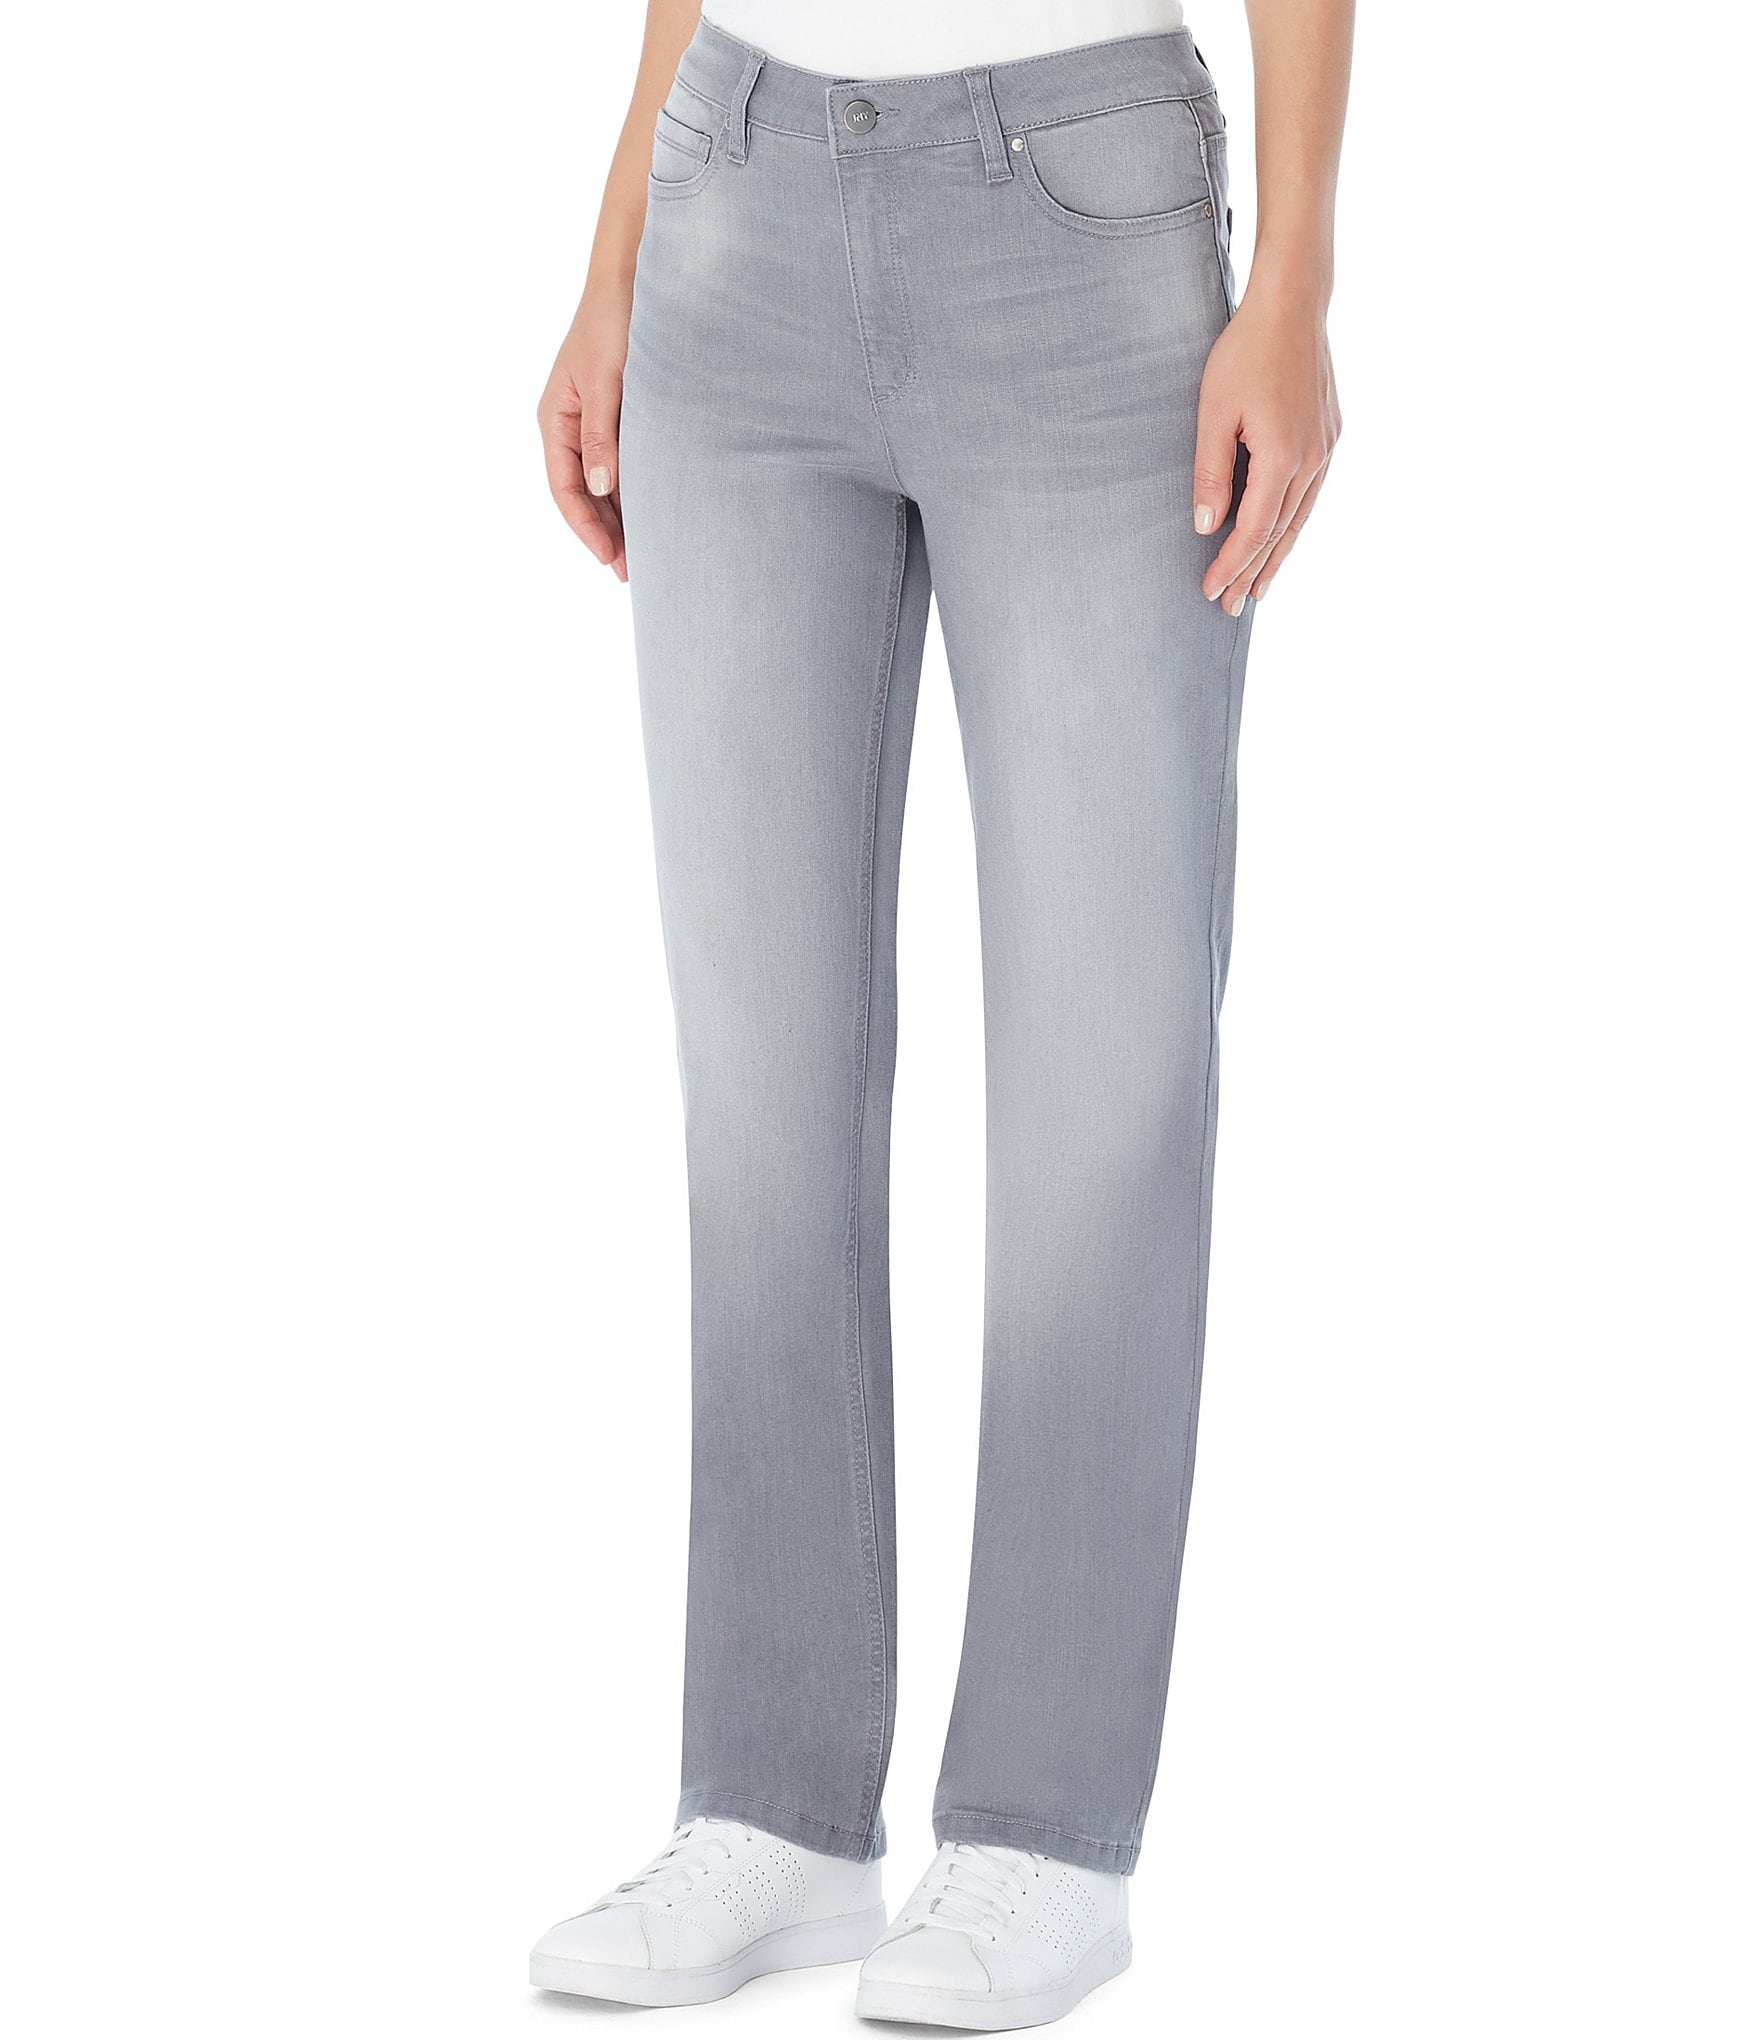 Grey Women's Jeans & Denim